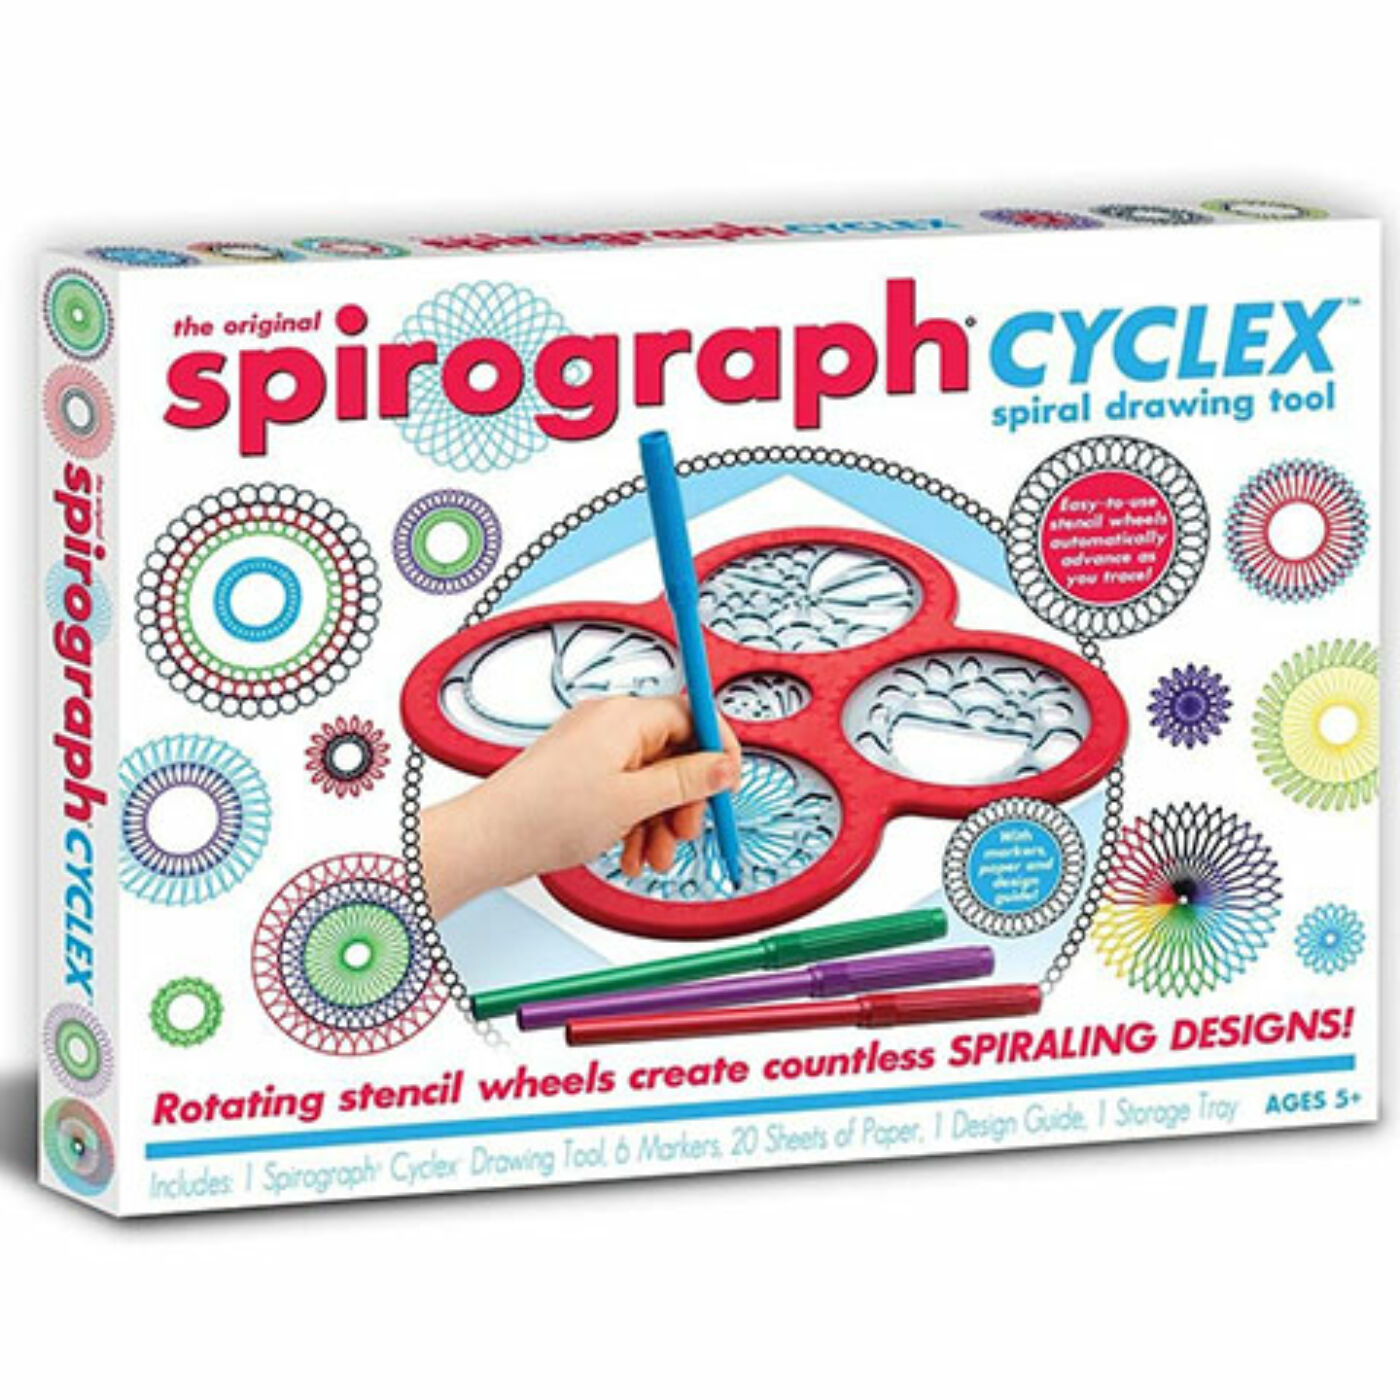 Spirograph cyclex